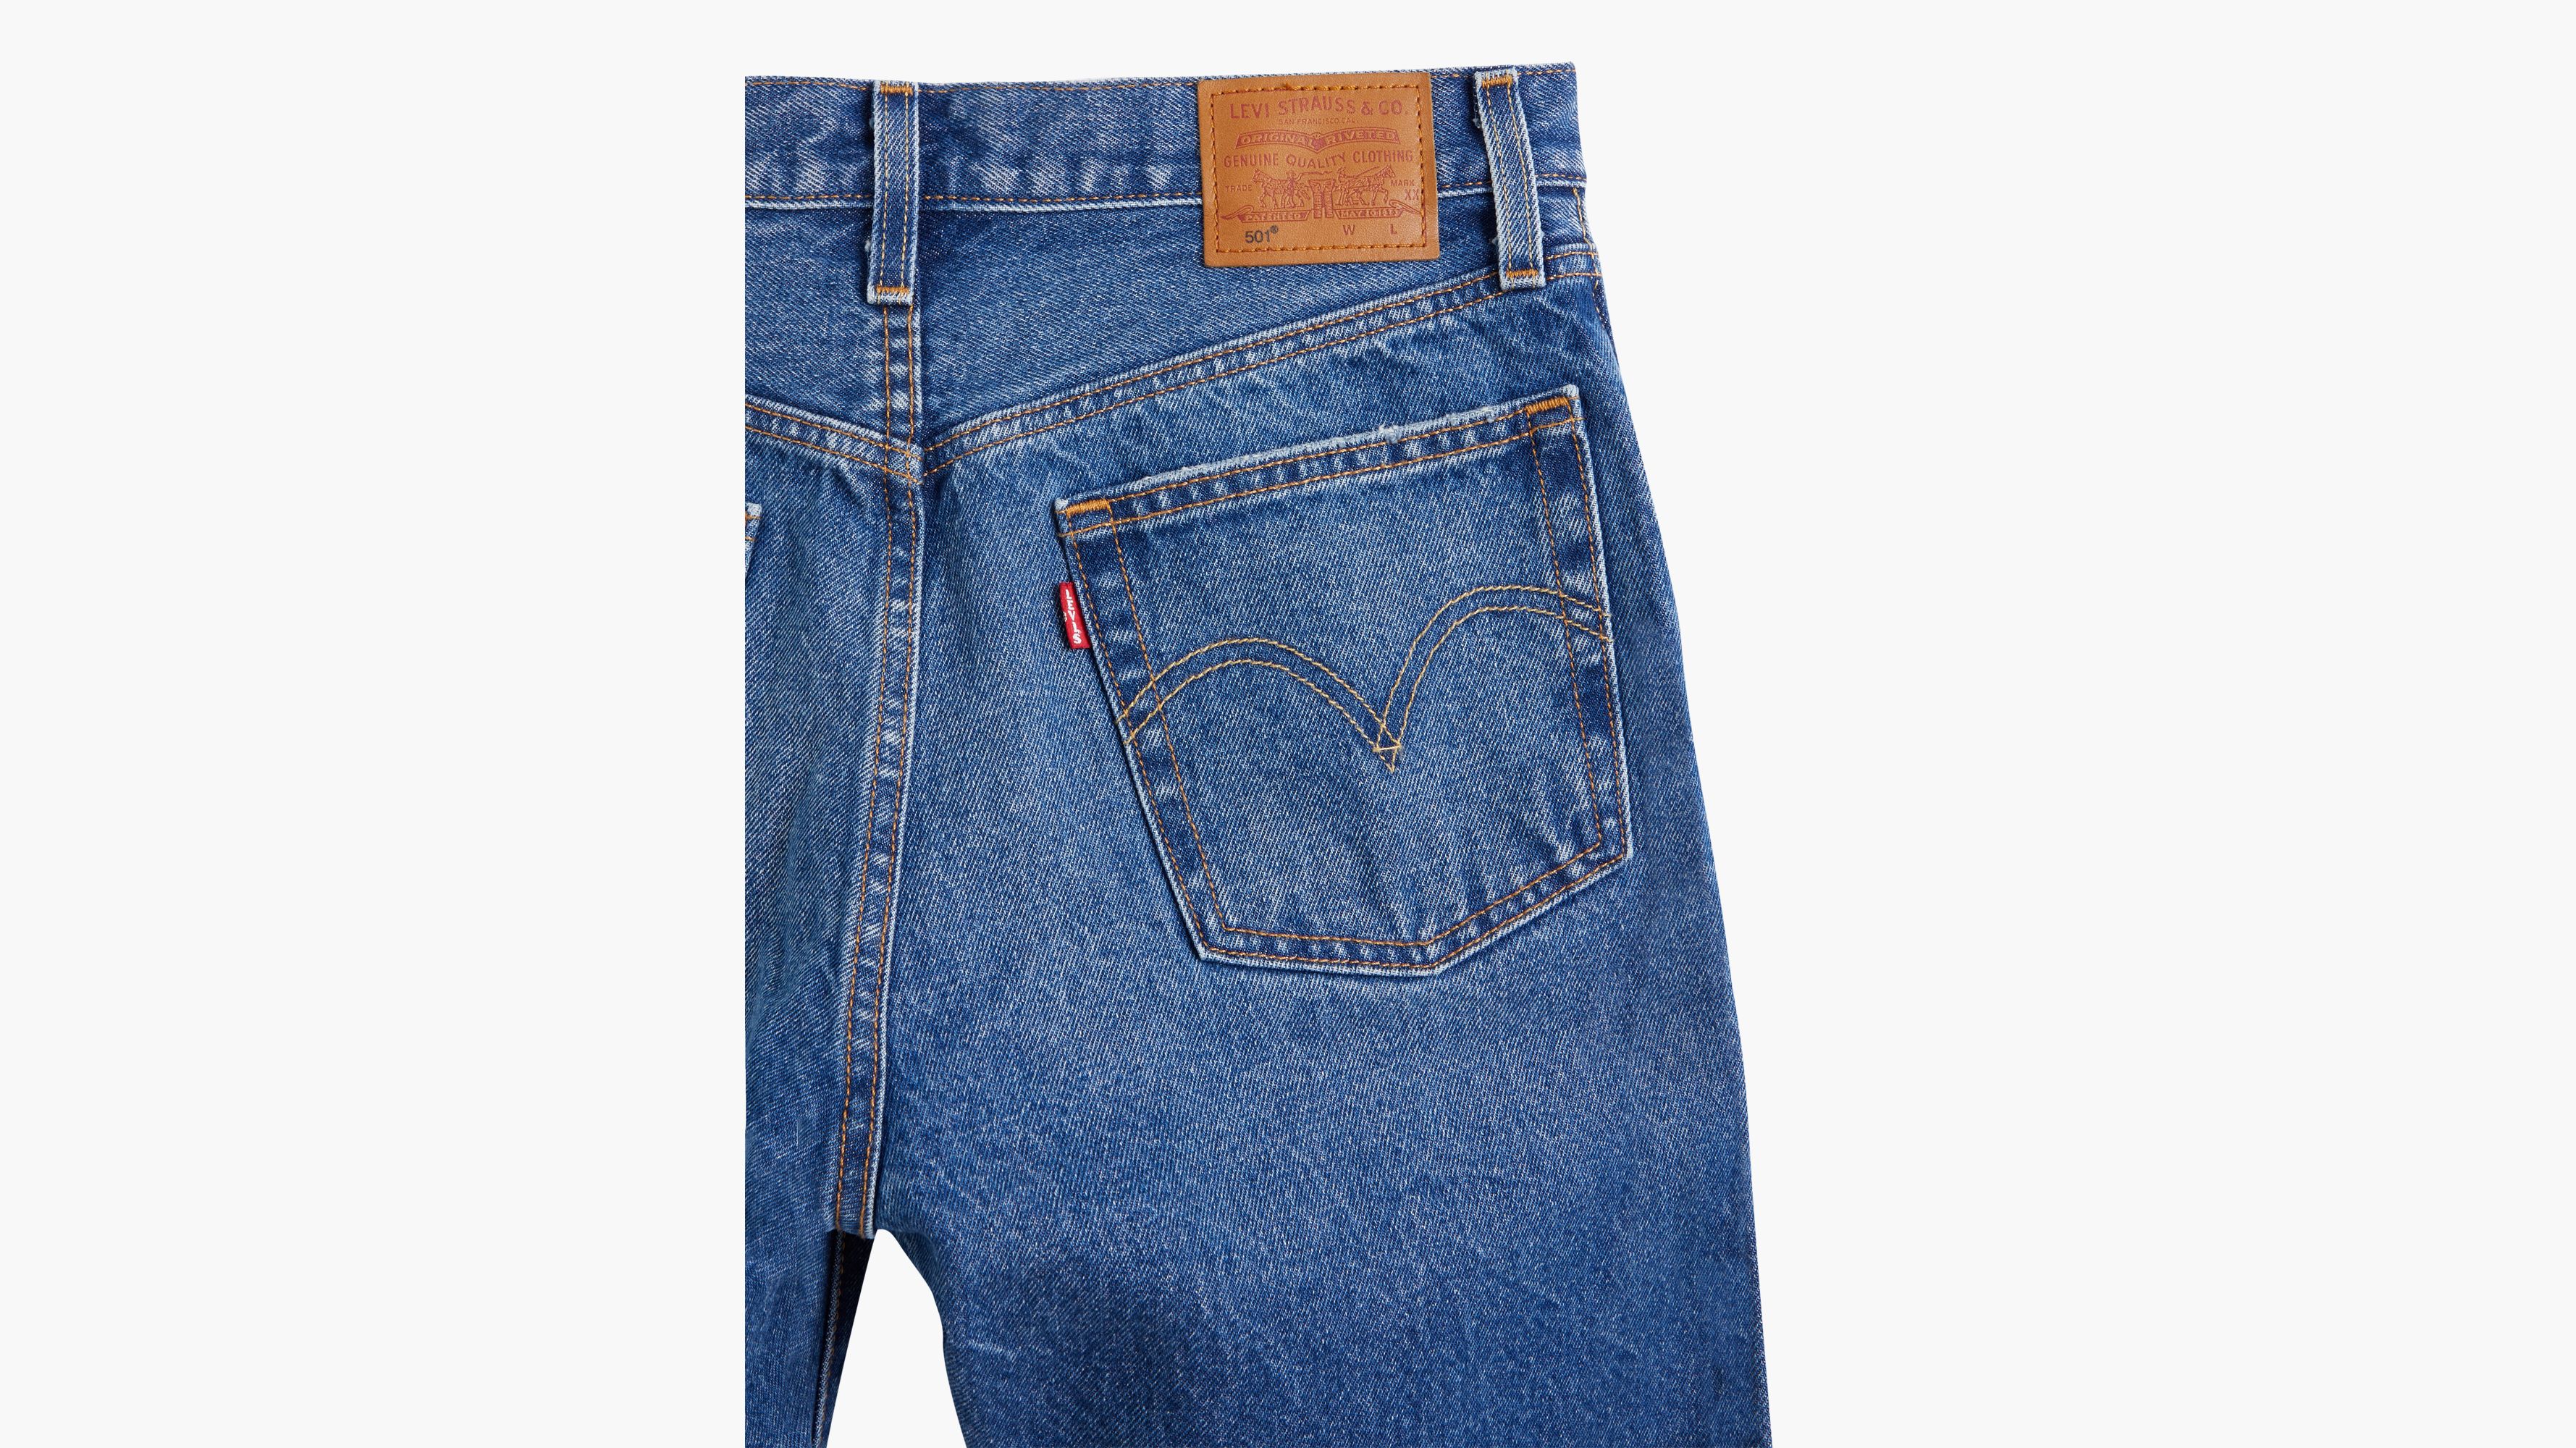 501® Original Fit Plant Based Women's Jeans - Light Wash